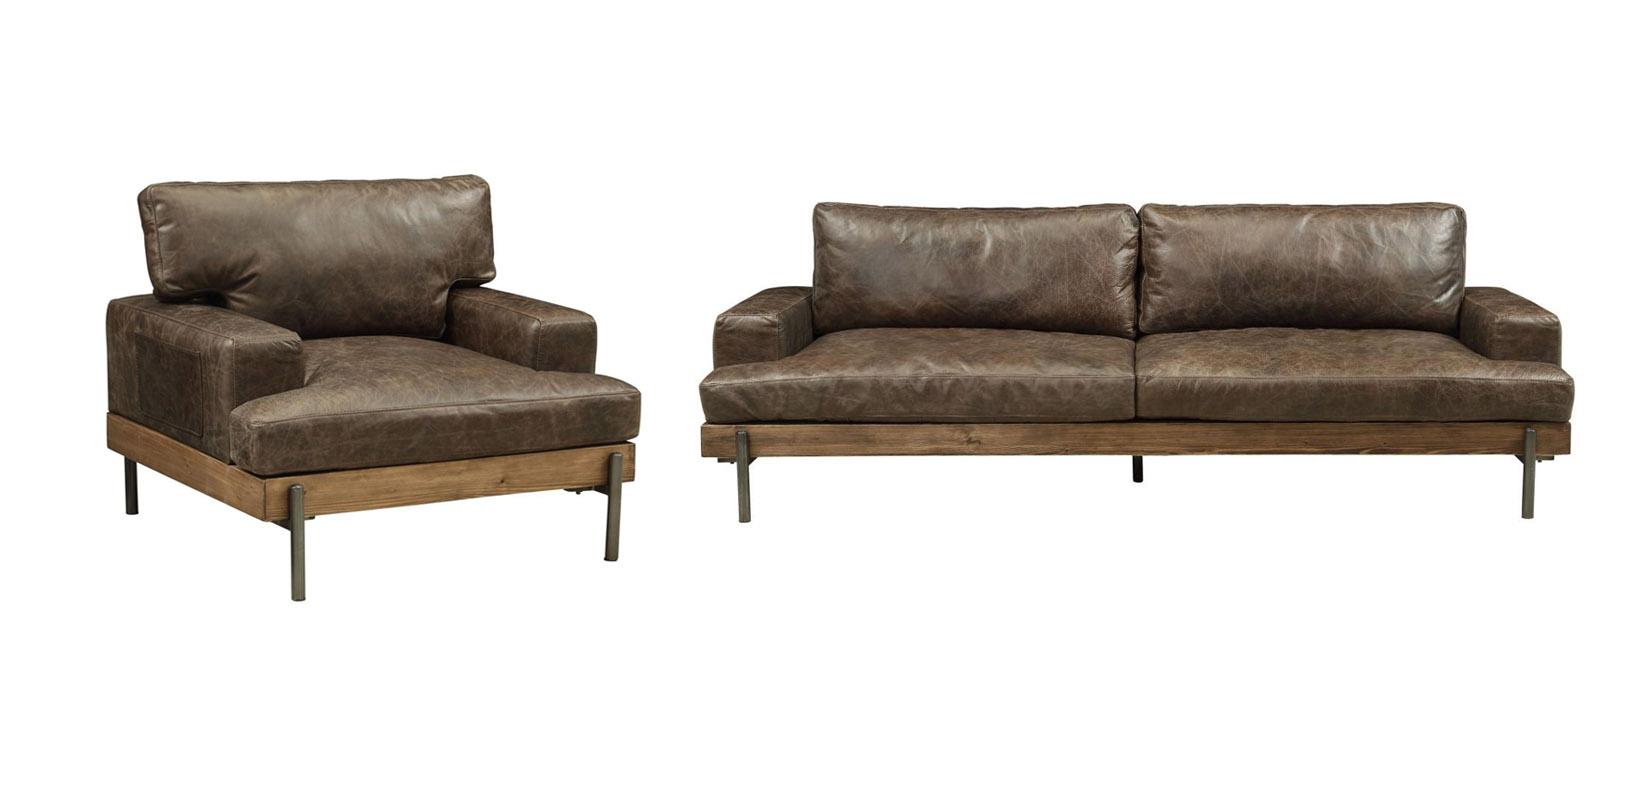 Vintage Sofa Chair SKU: W000009894 SKU: W000009894 in Chocolate Top grain leather